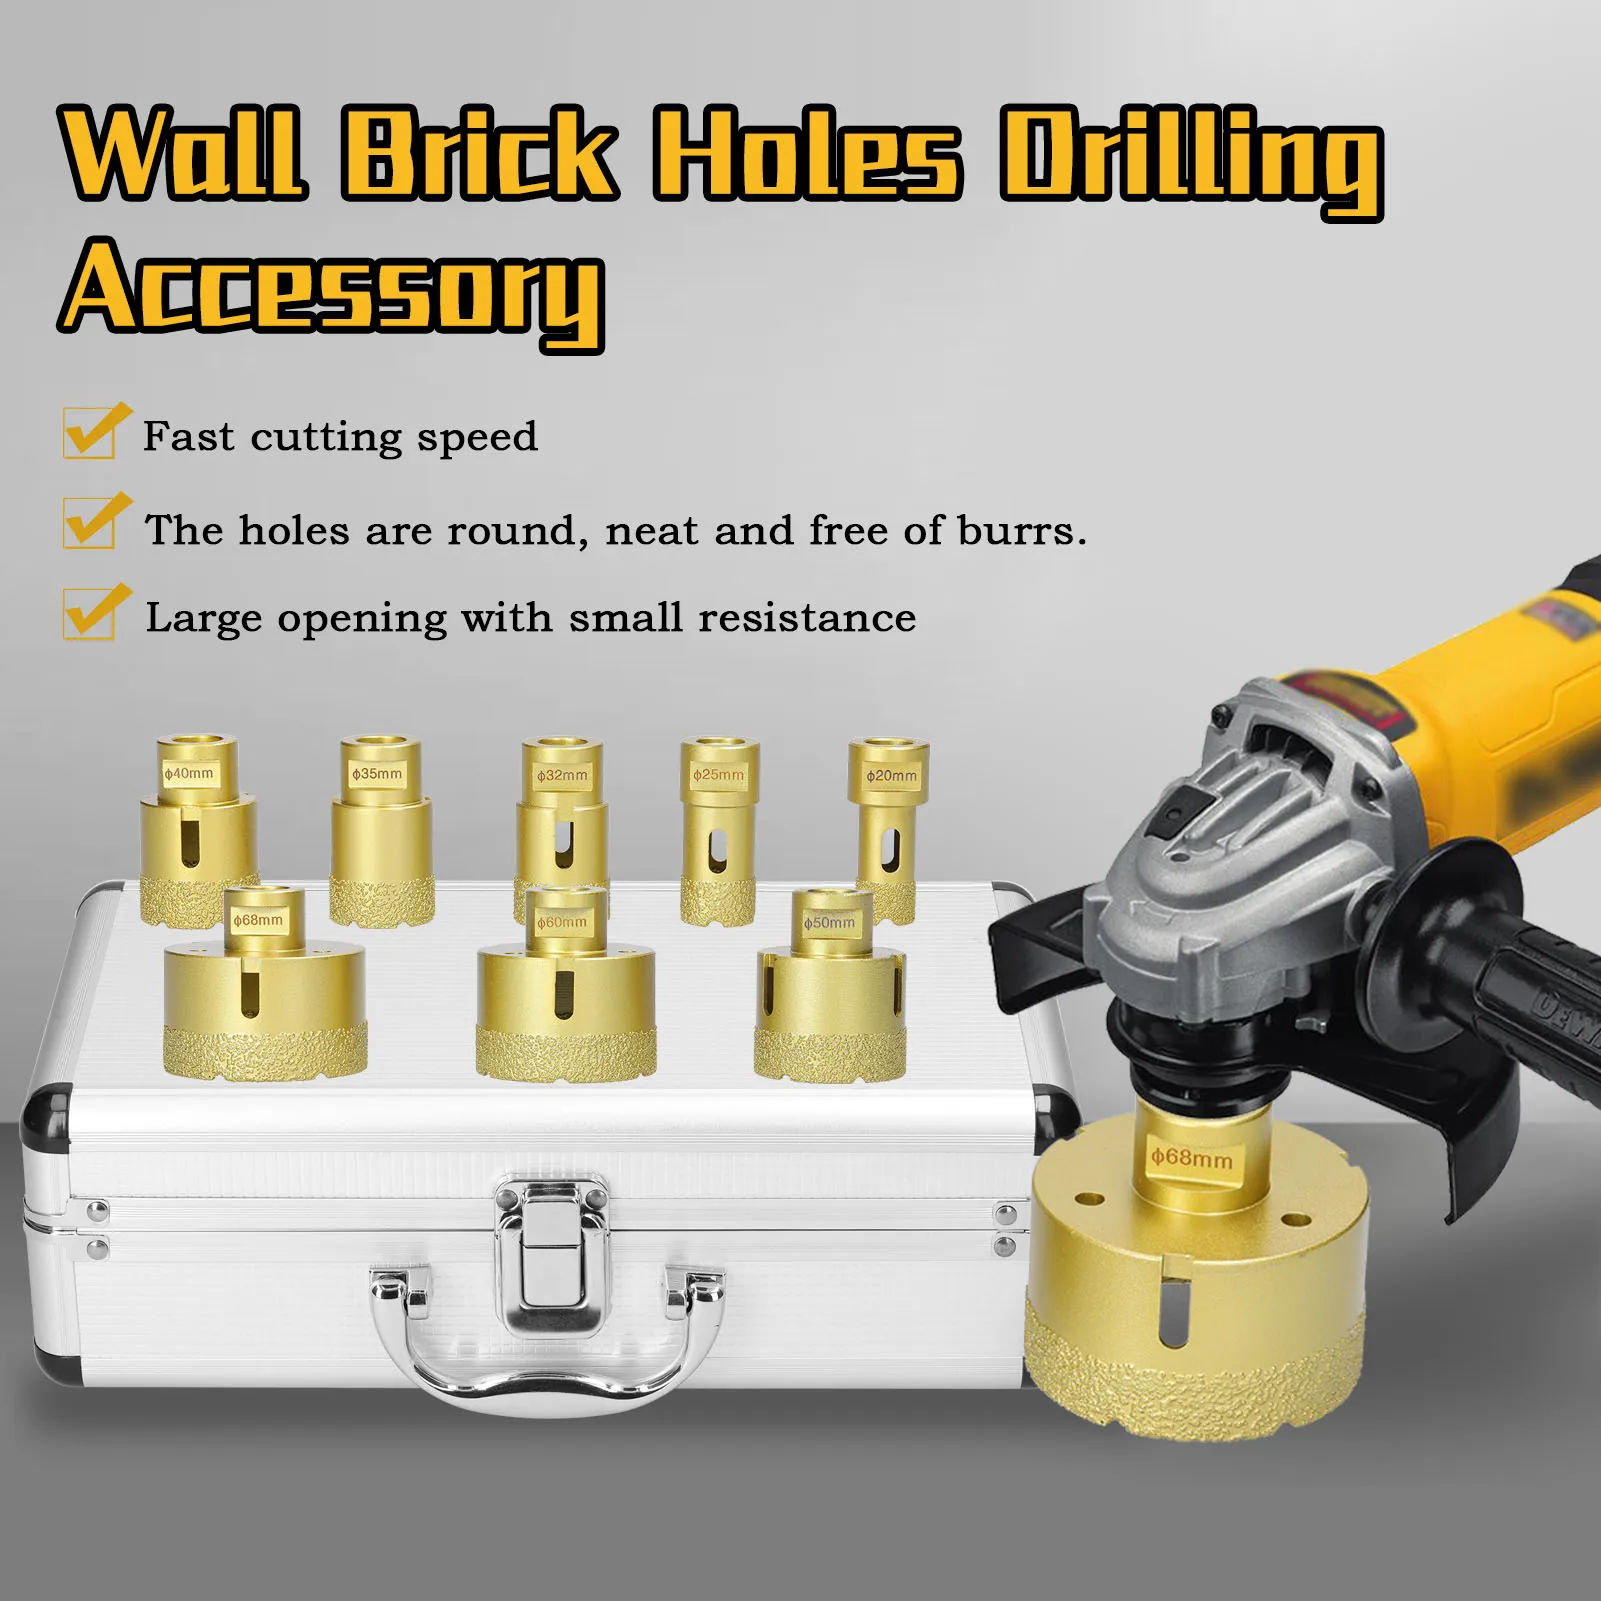 

8pcs Brazed Welding Diamond Core Drill Bit Marble Ceramic Tile Wall Brick Holes Drilling Accessory with Aluminum Alloy Box